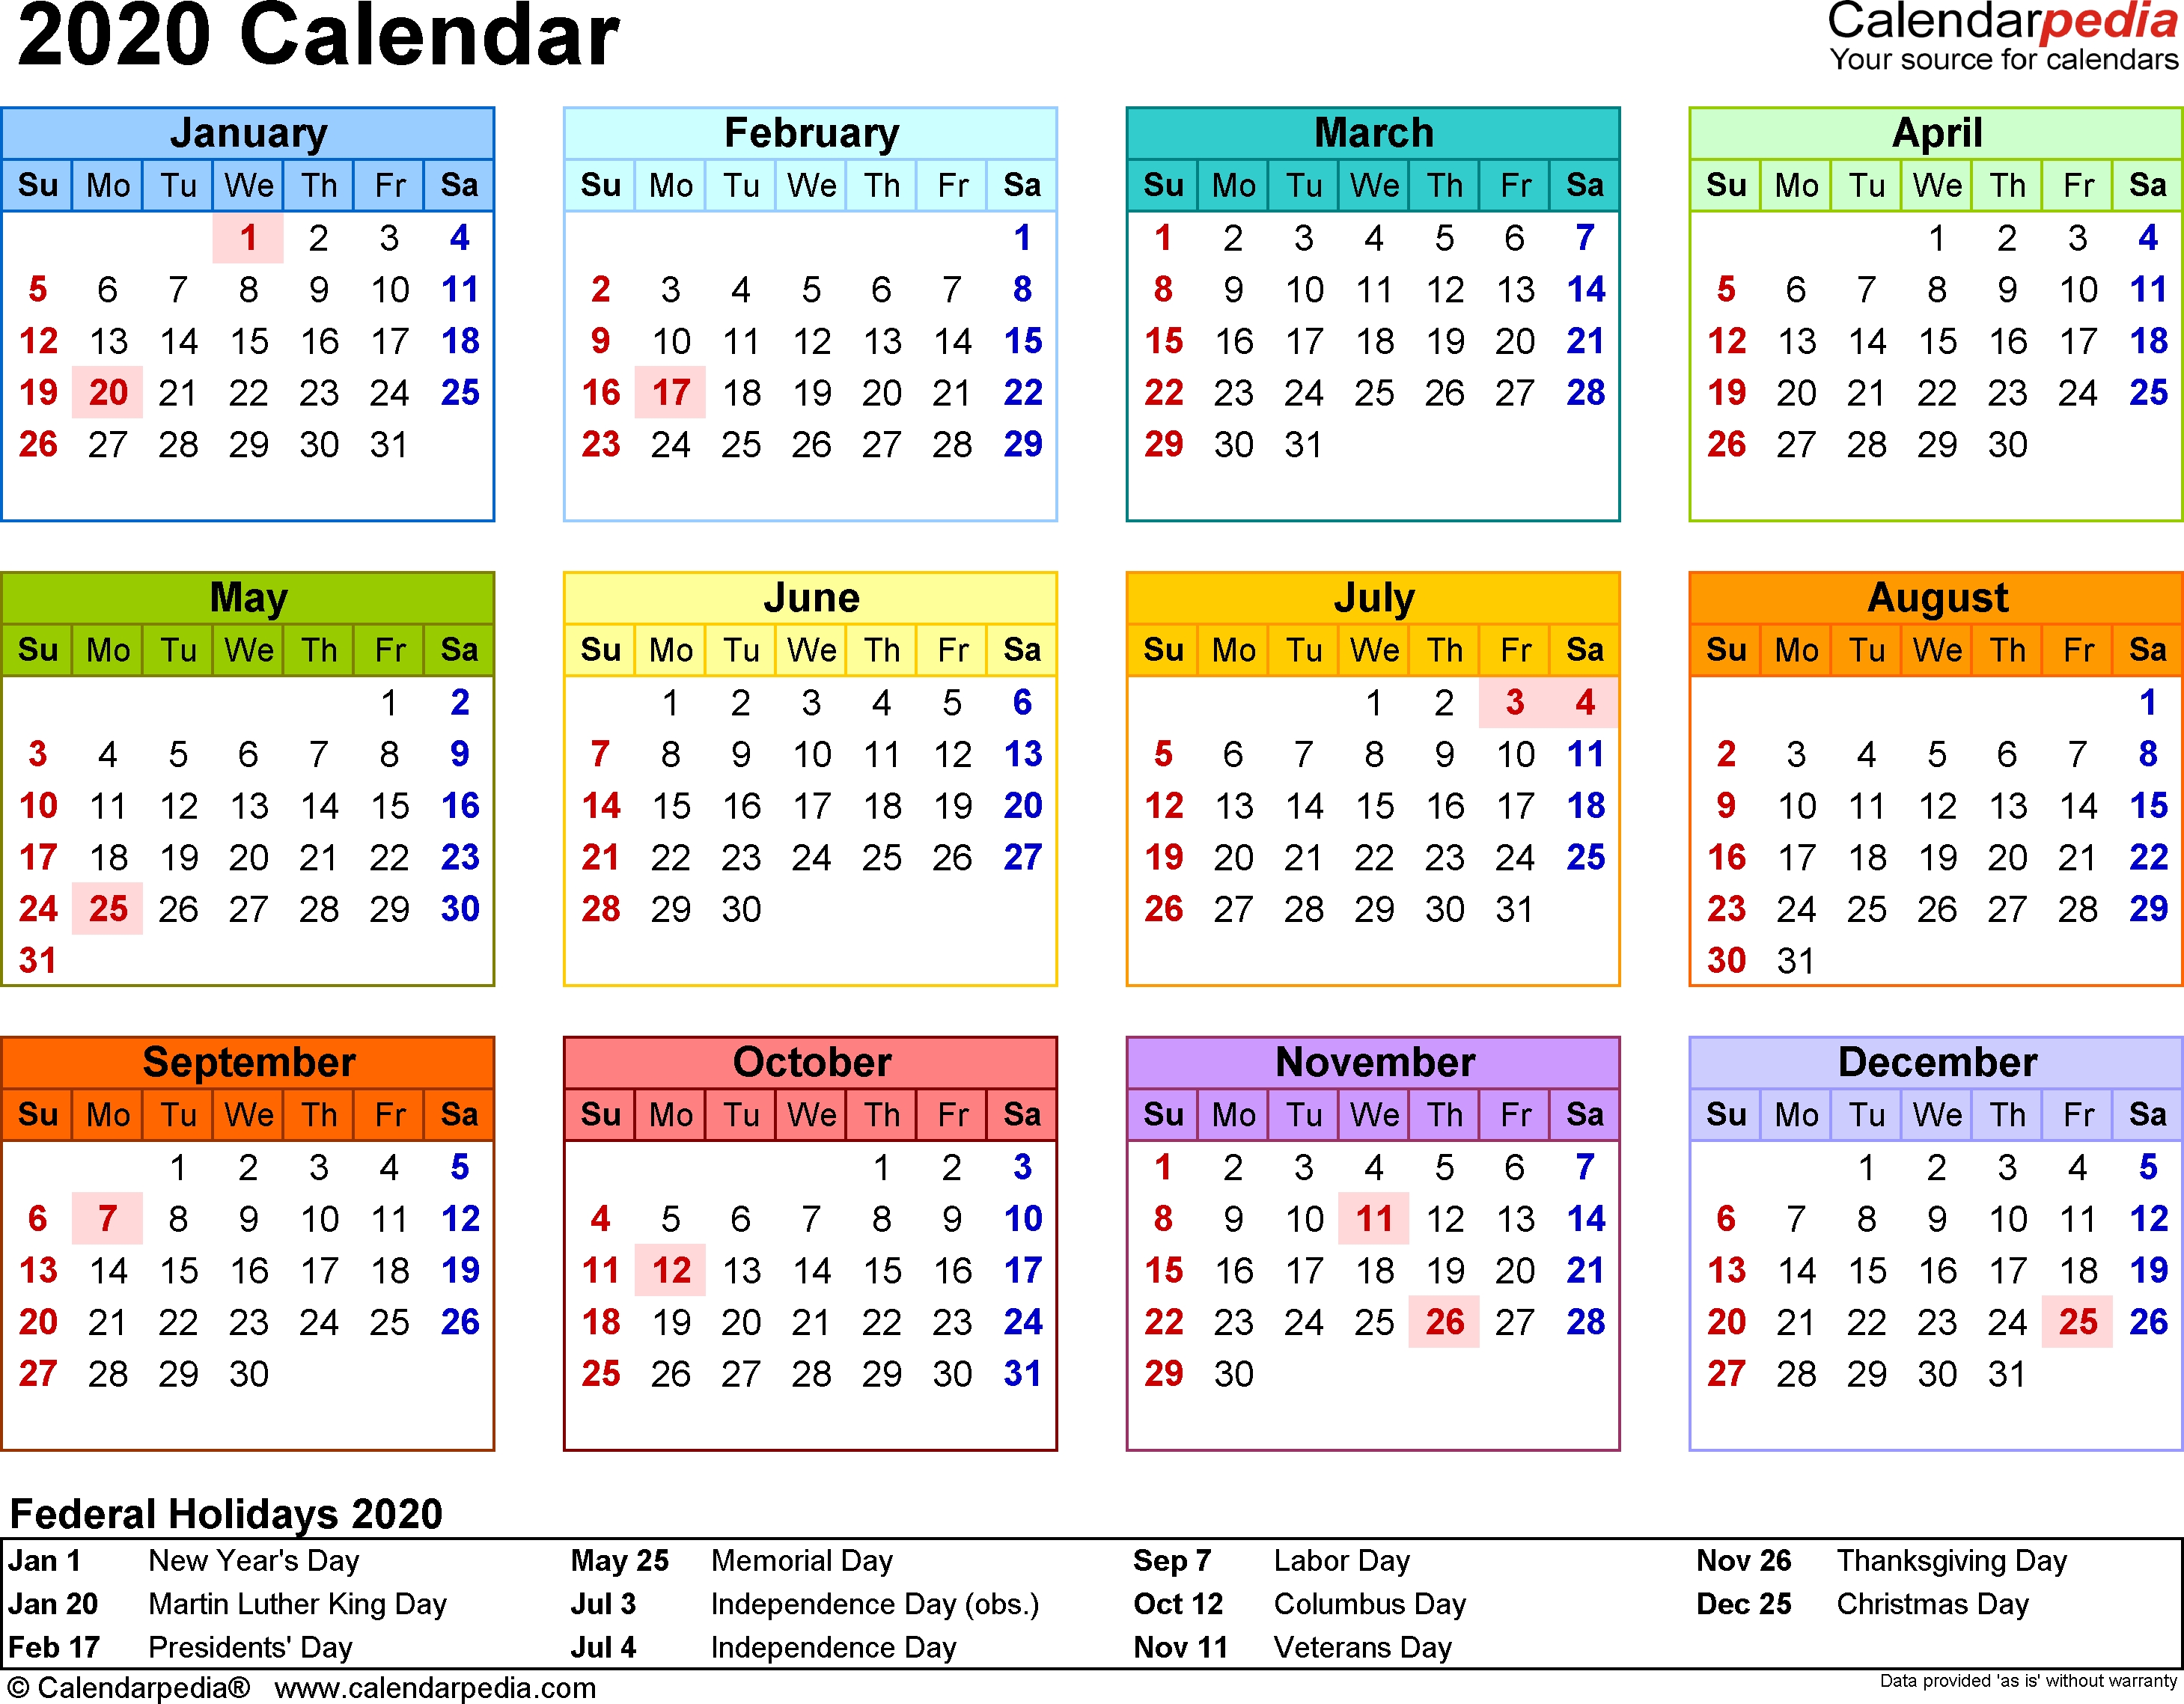 2020 Calendar - 17 Free Printable Word Calendar Templates intended for Half Page Calendars 2020 Printable